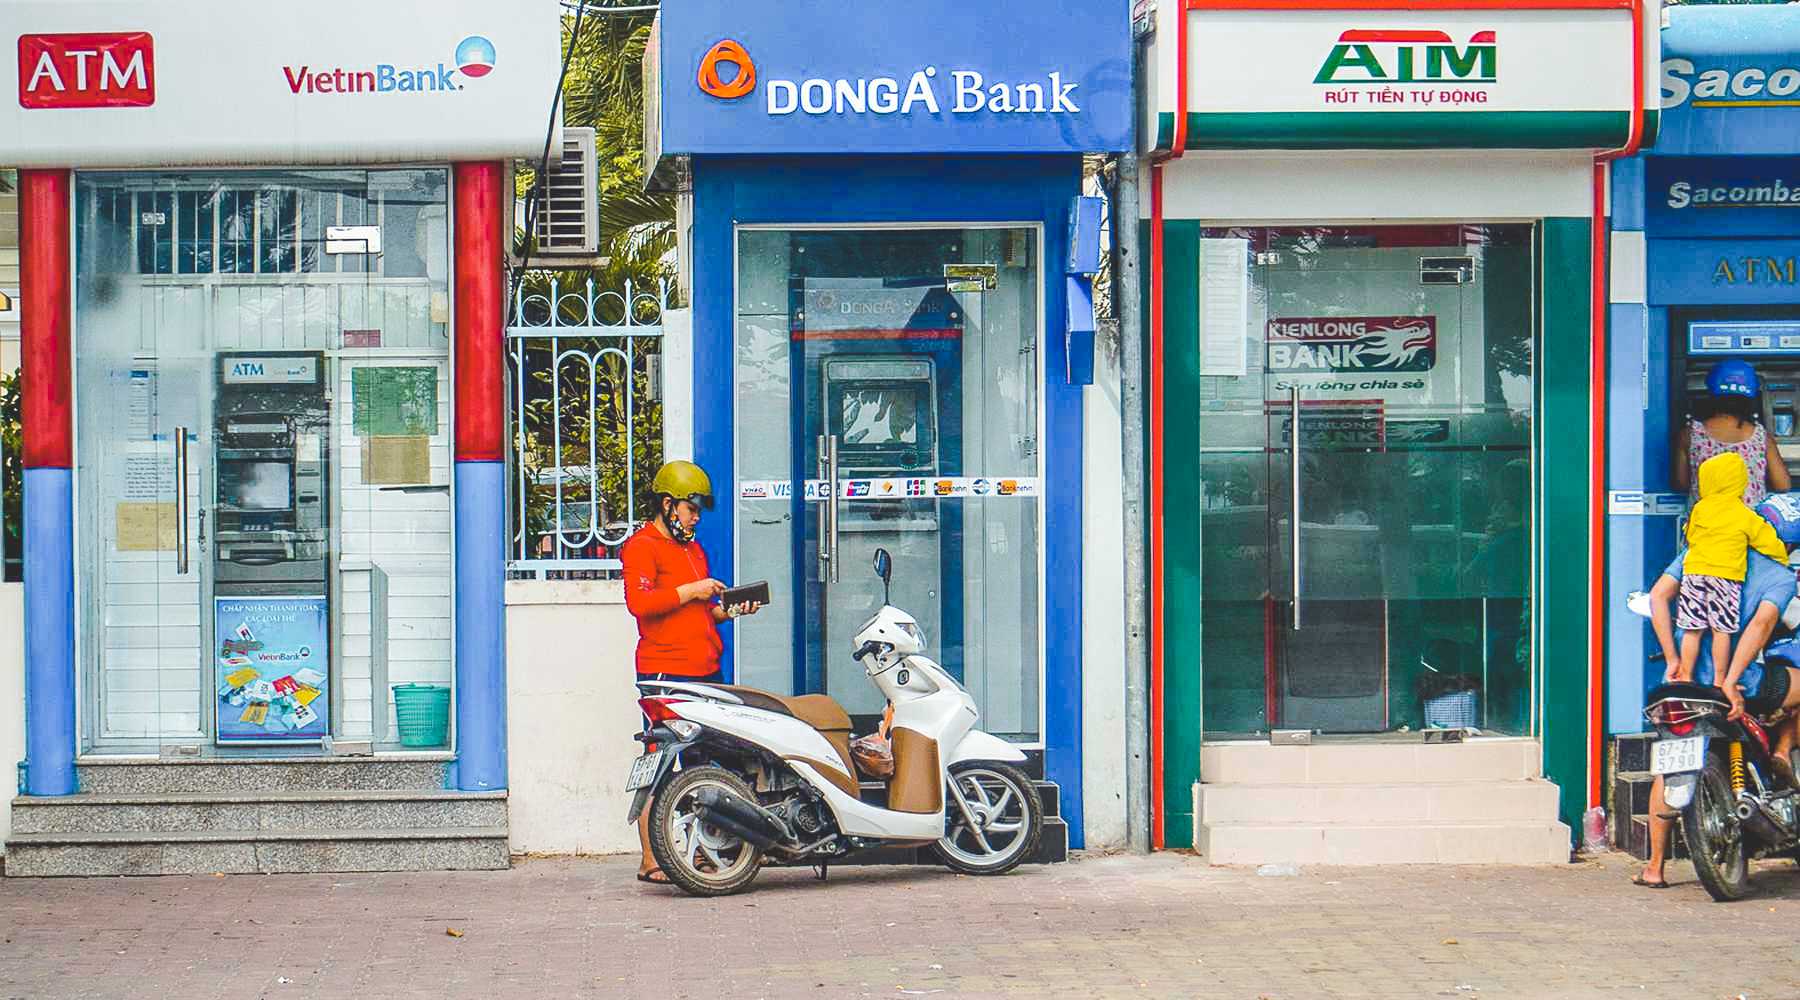 ATM Vietnam - Maximum withdrawal, banks, fees and tips | localvietnam